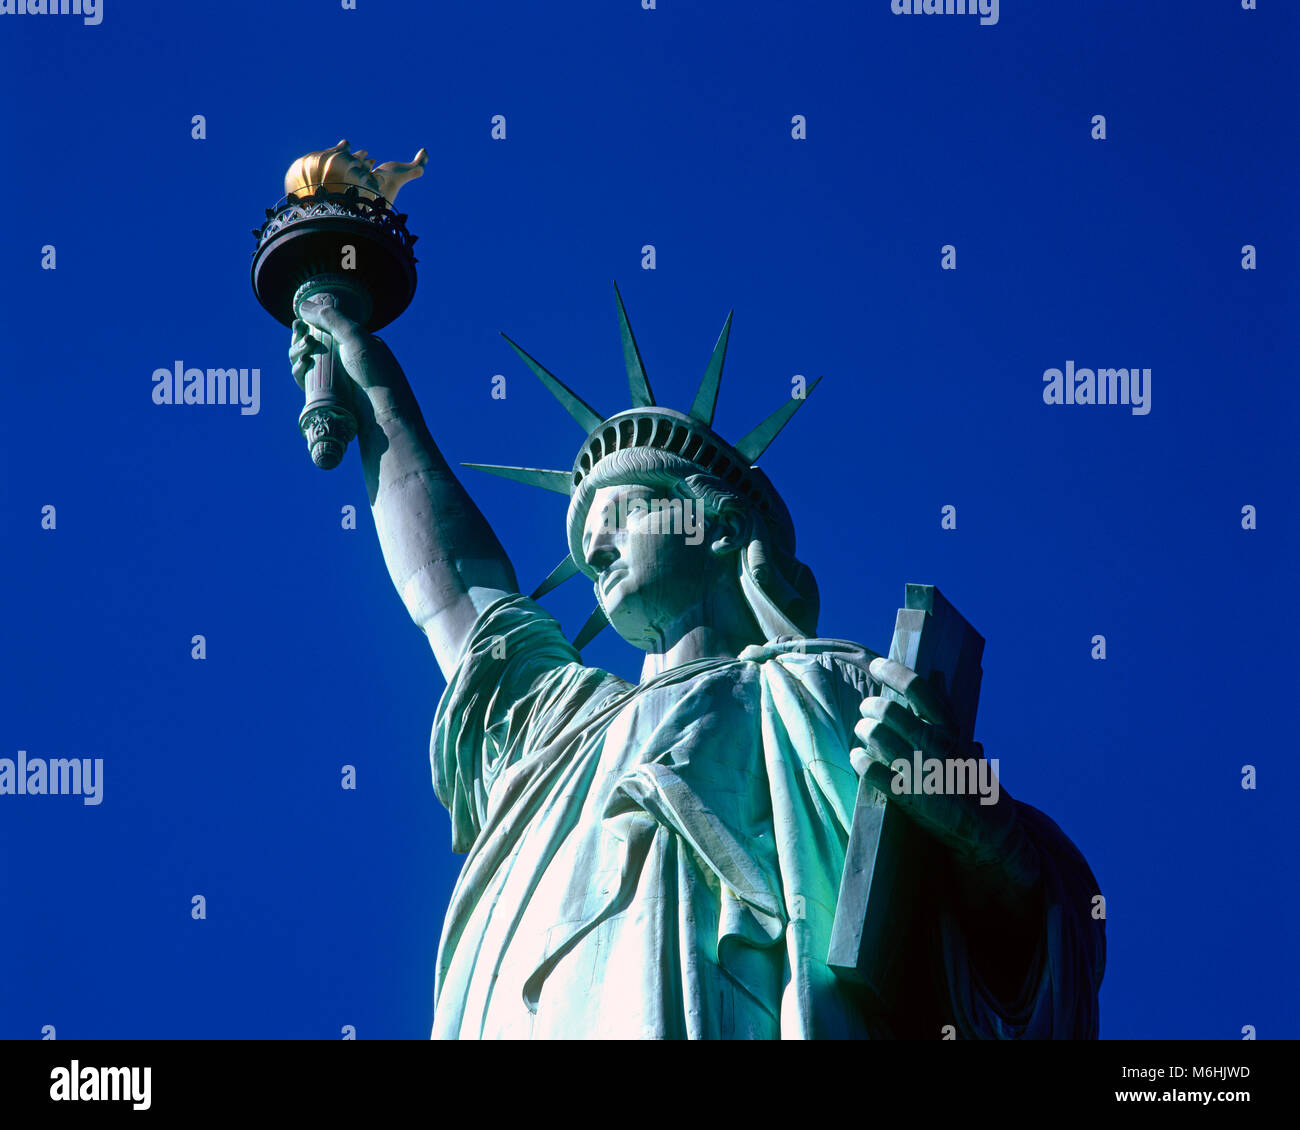 Statue of Liberty, Liberty Island, New York, USA Stock Photo